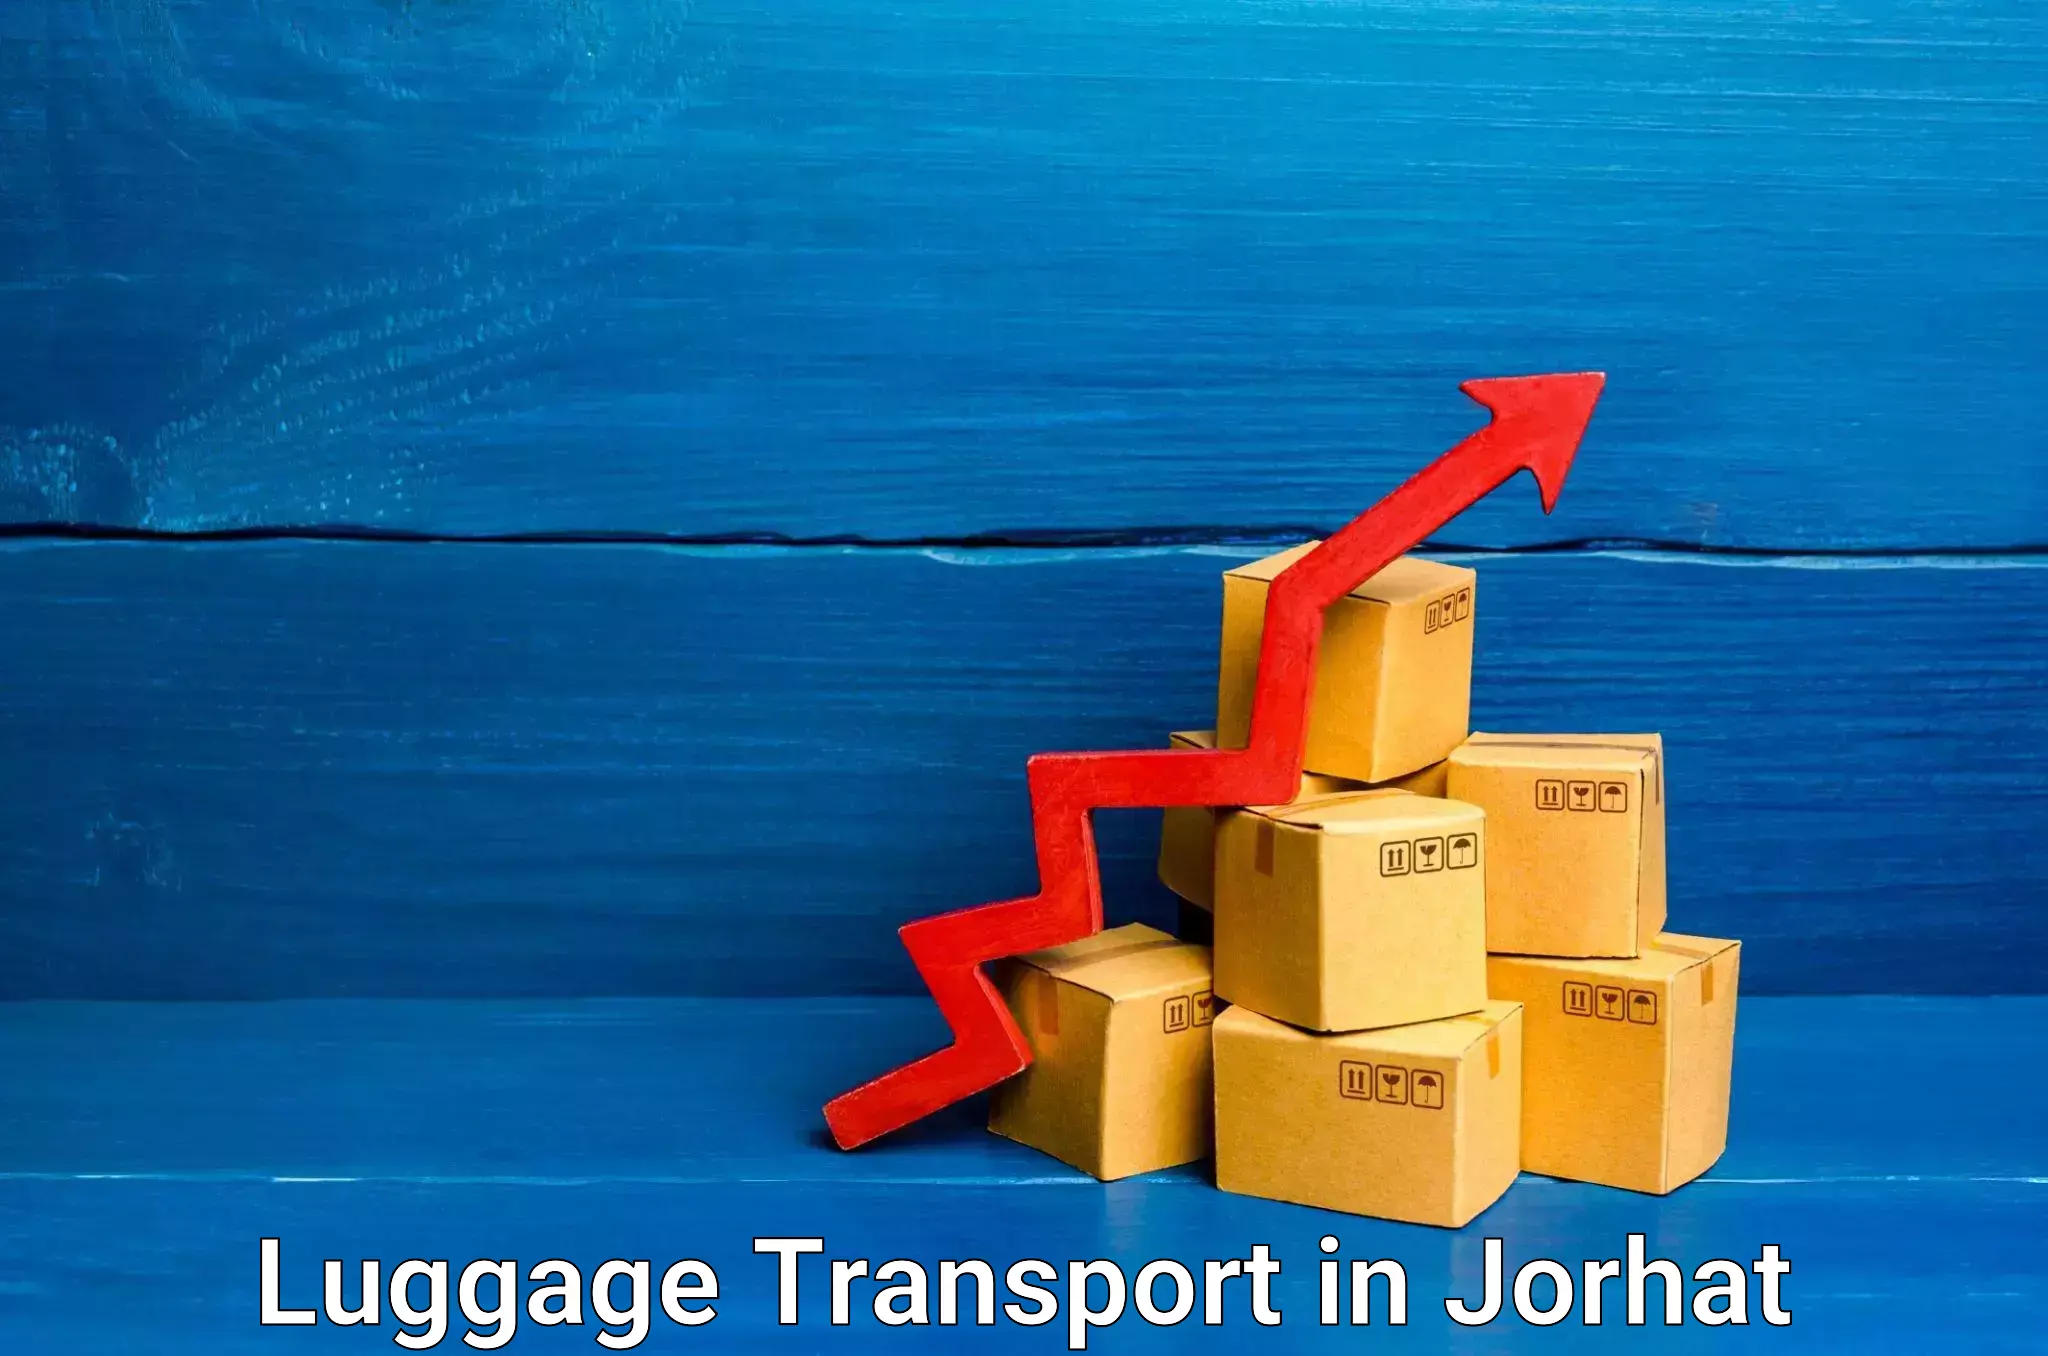 Luggage transport service in Jorhat